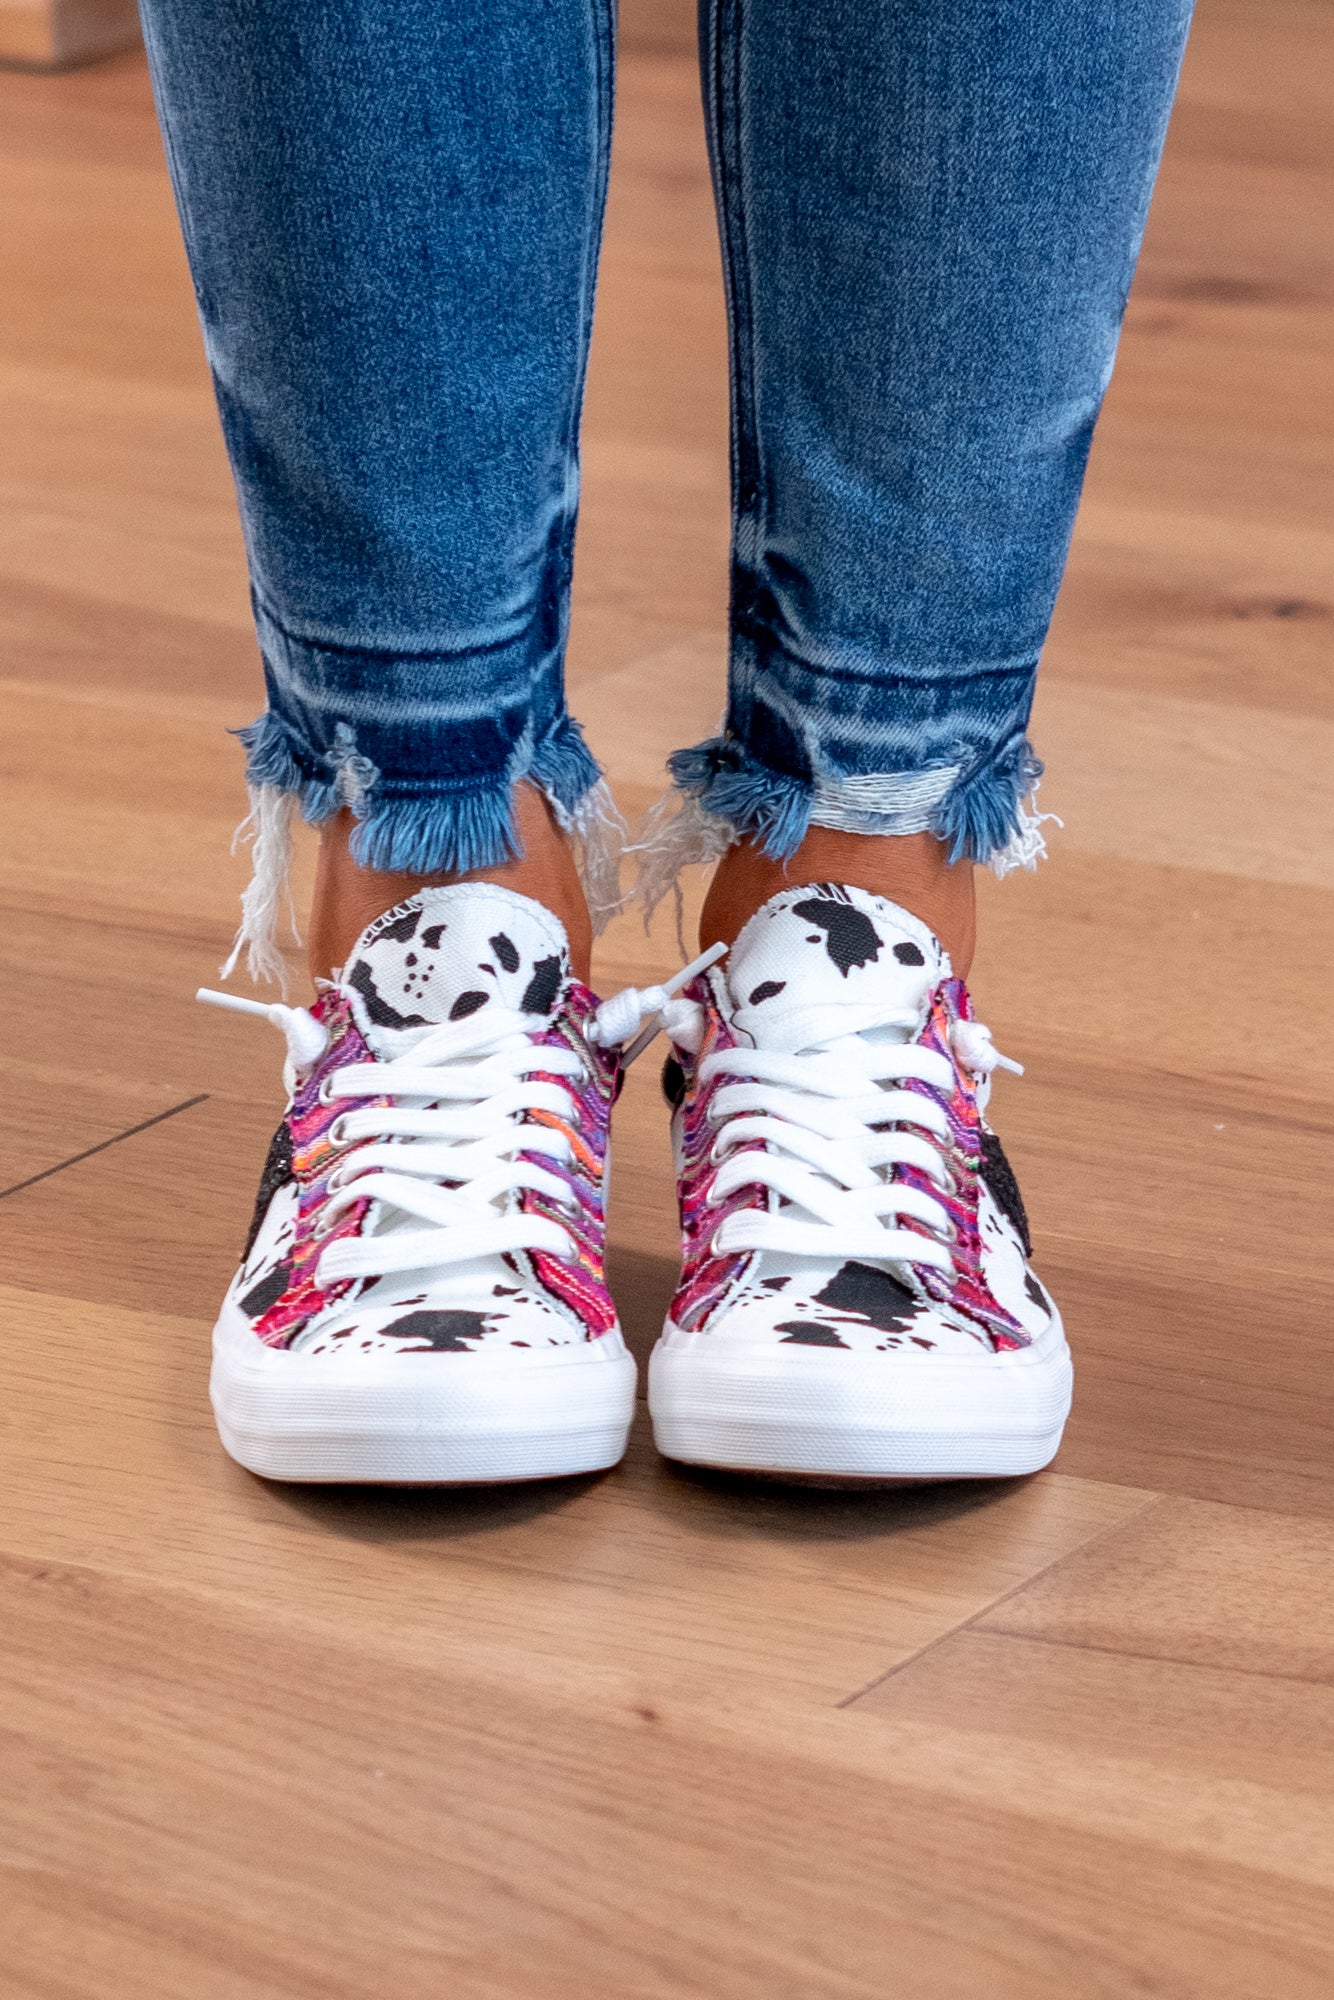 Elastic Laces Zebra Sneakers | Laces Black White Sneakers | Elastic Leopard  Shoe Laces - Shoelaces - Aliexpress